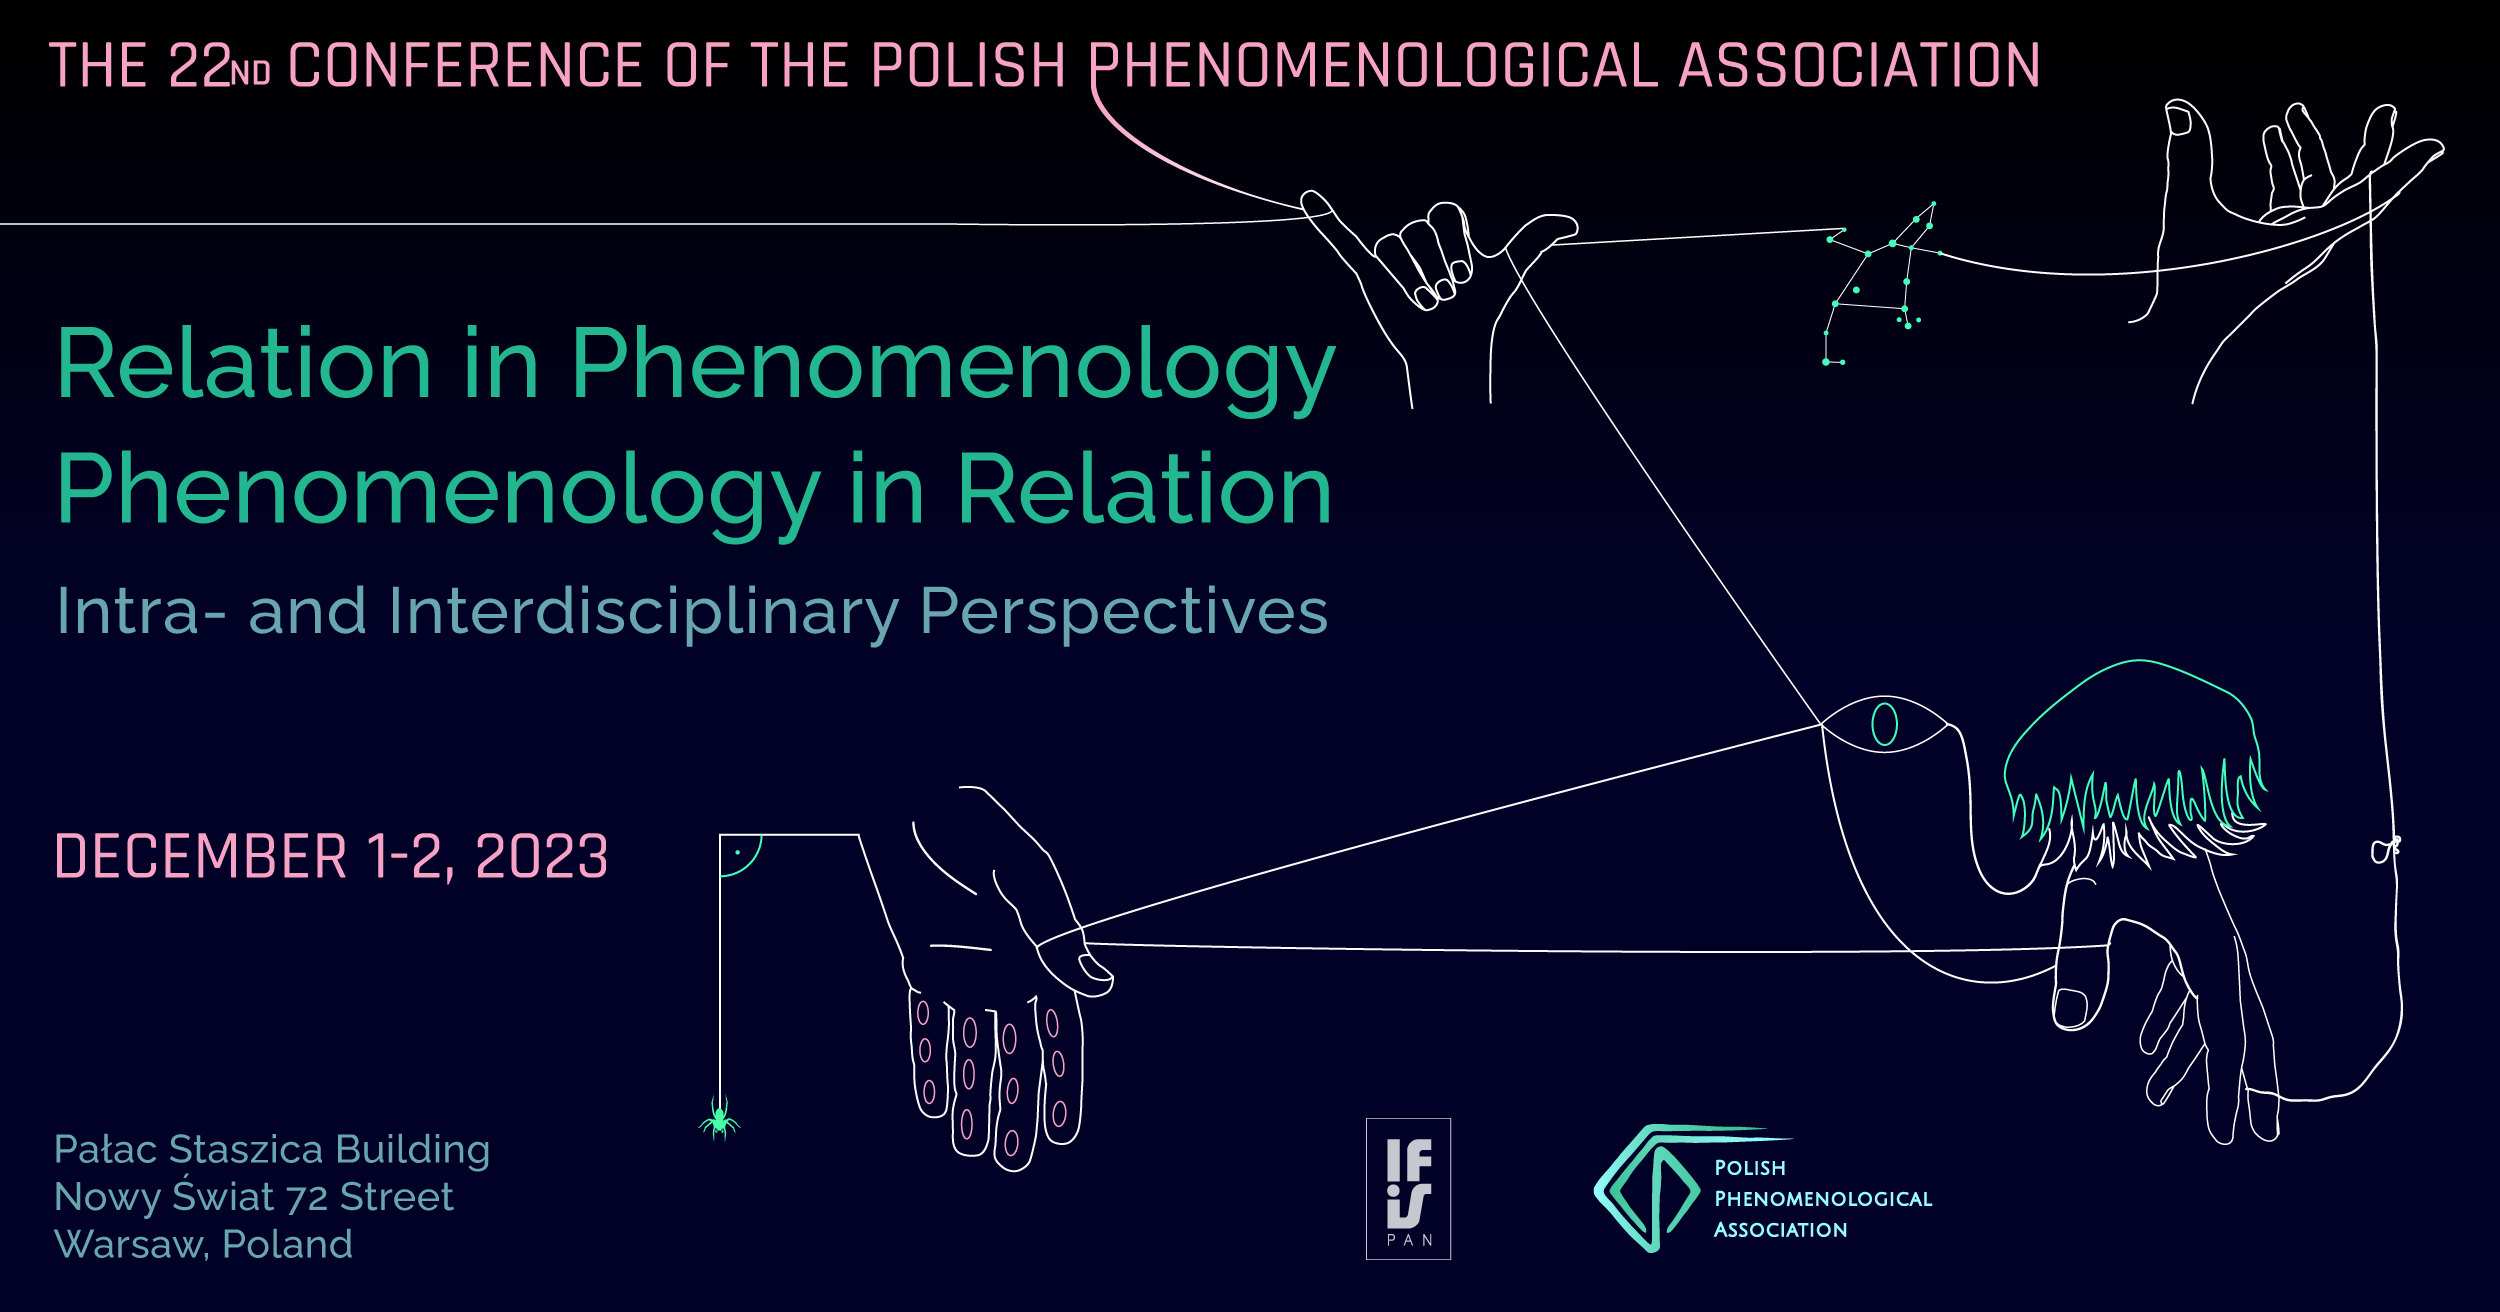 phenomenology in relation poster design